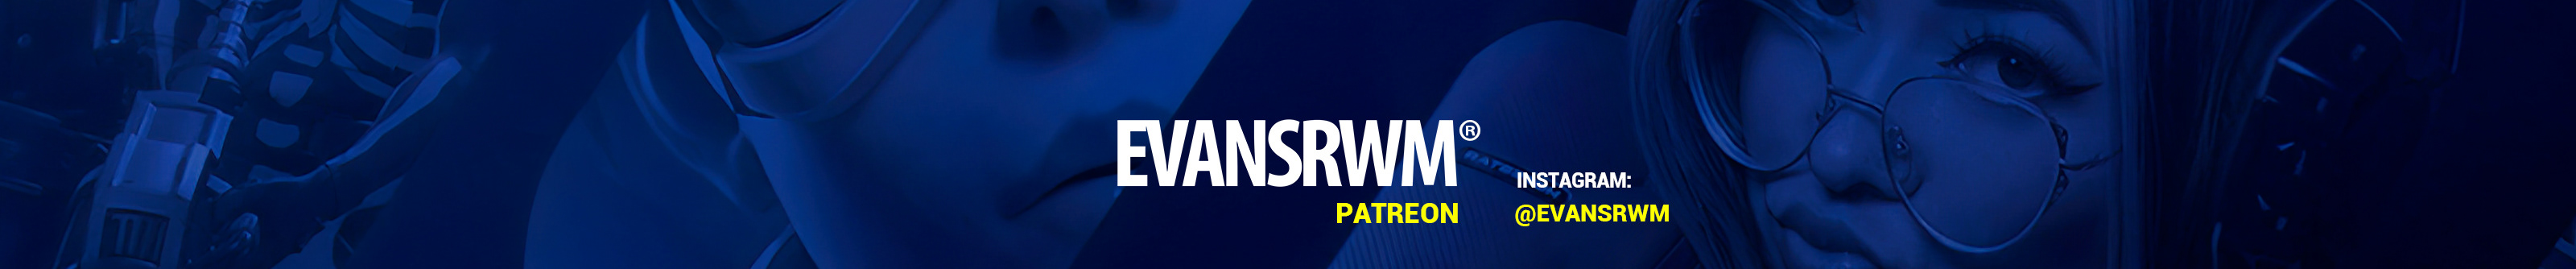 EVANS RWM's profile banner